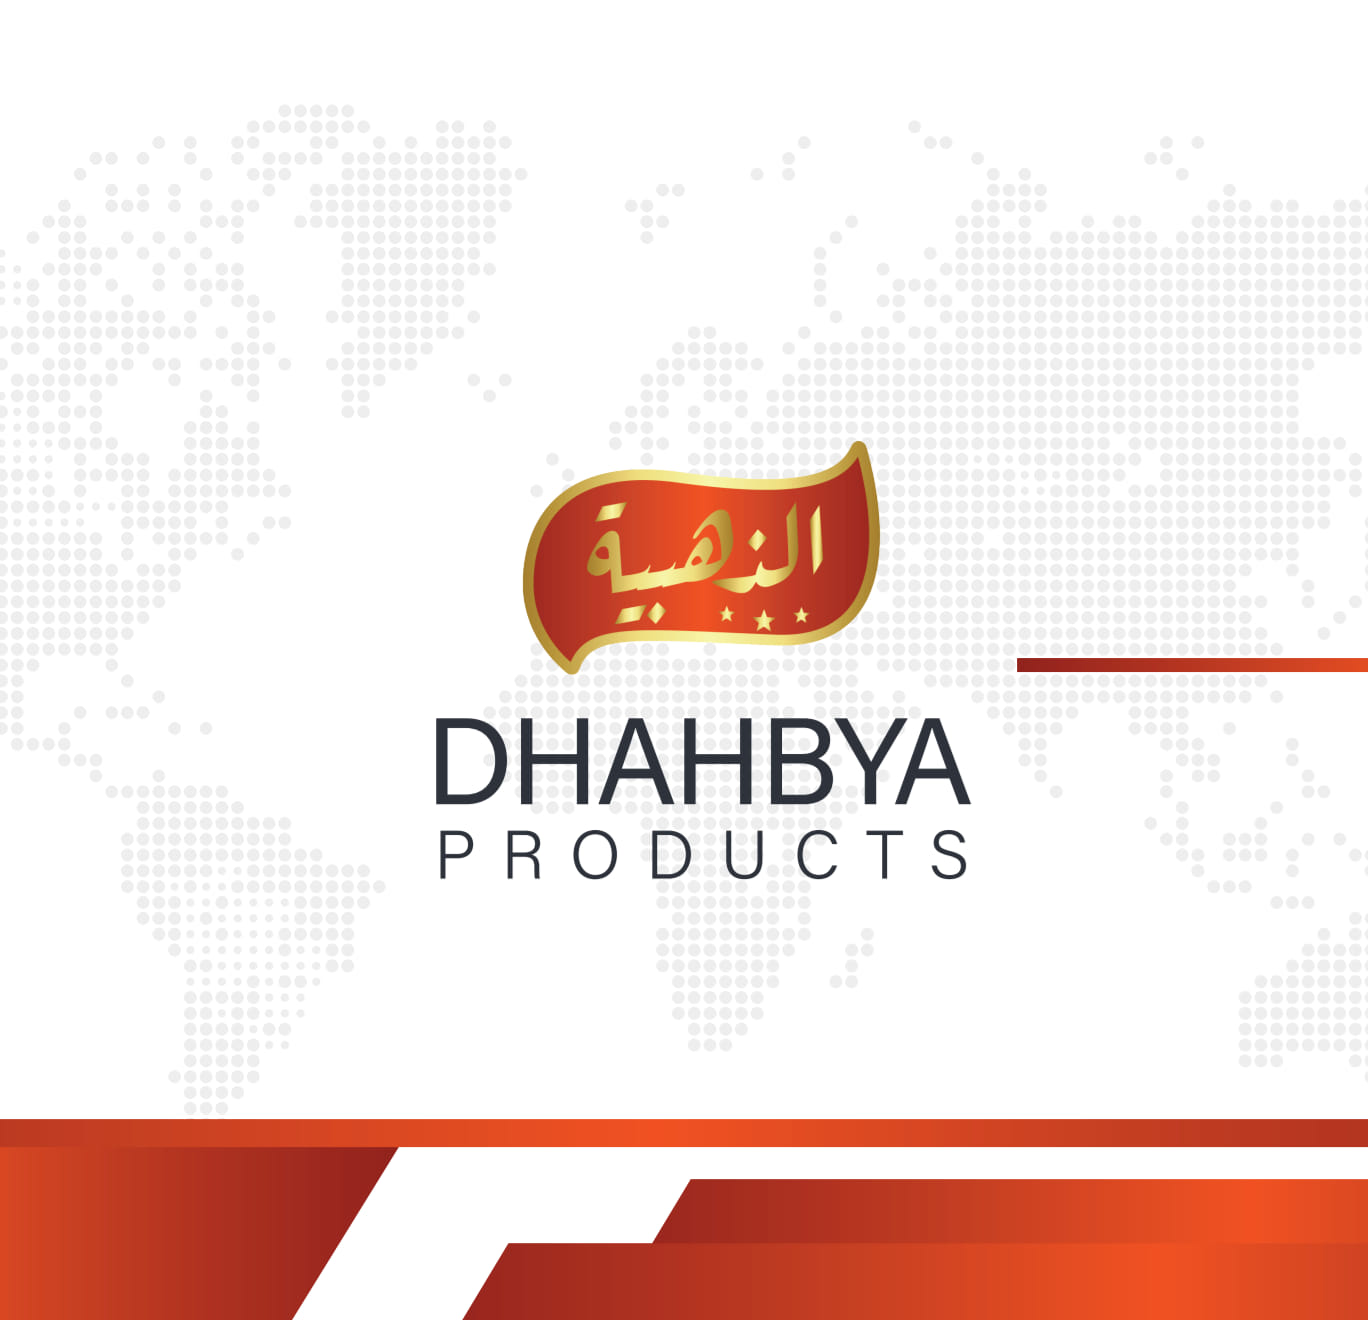 DHAHBYA PRODUCTS